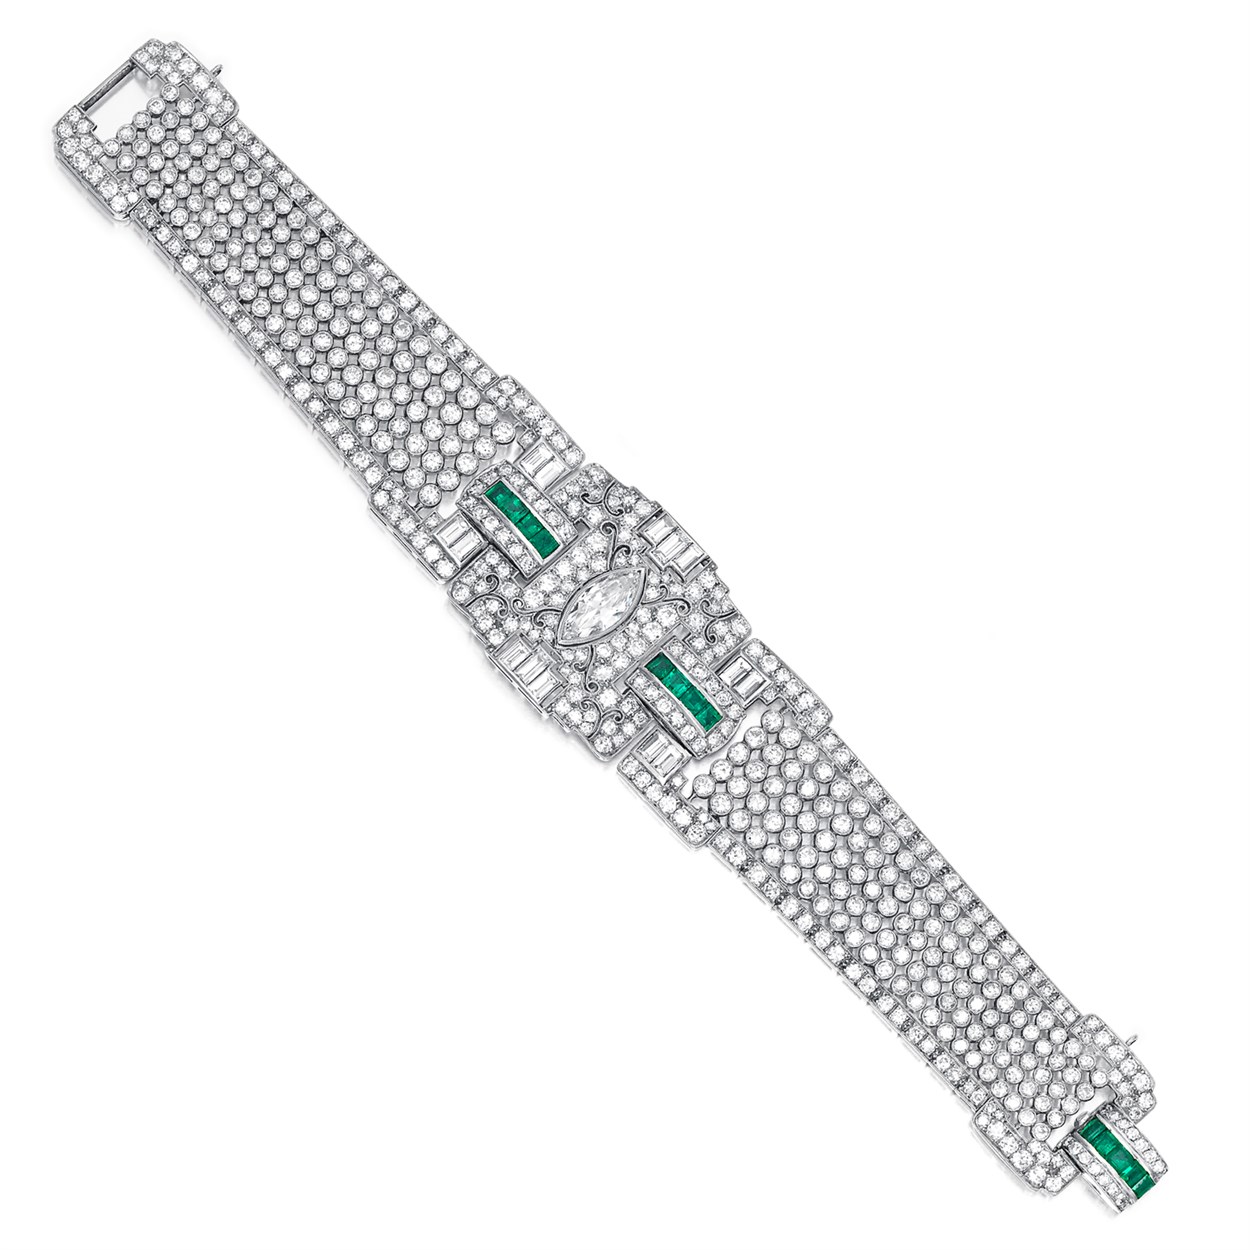 Lot 114 - An Art Deco diamond, emerald, and platinum bracelet